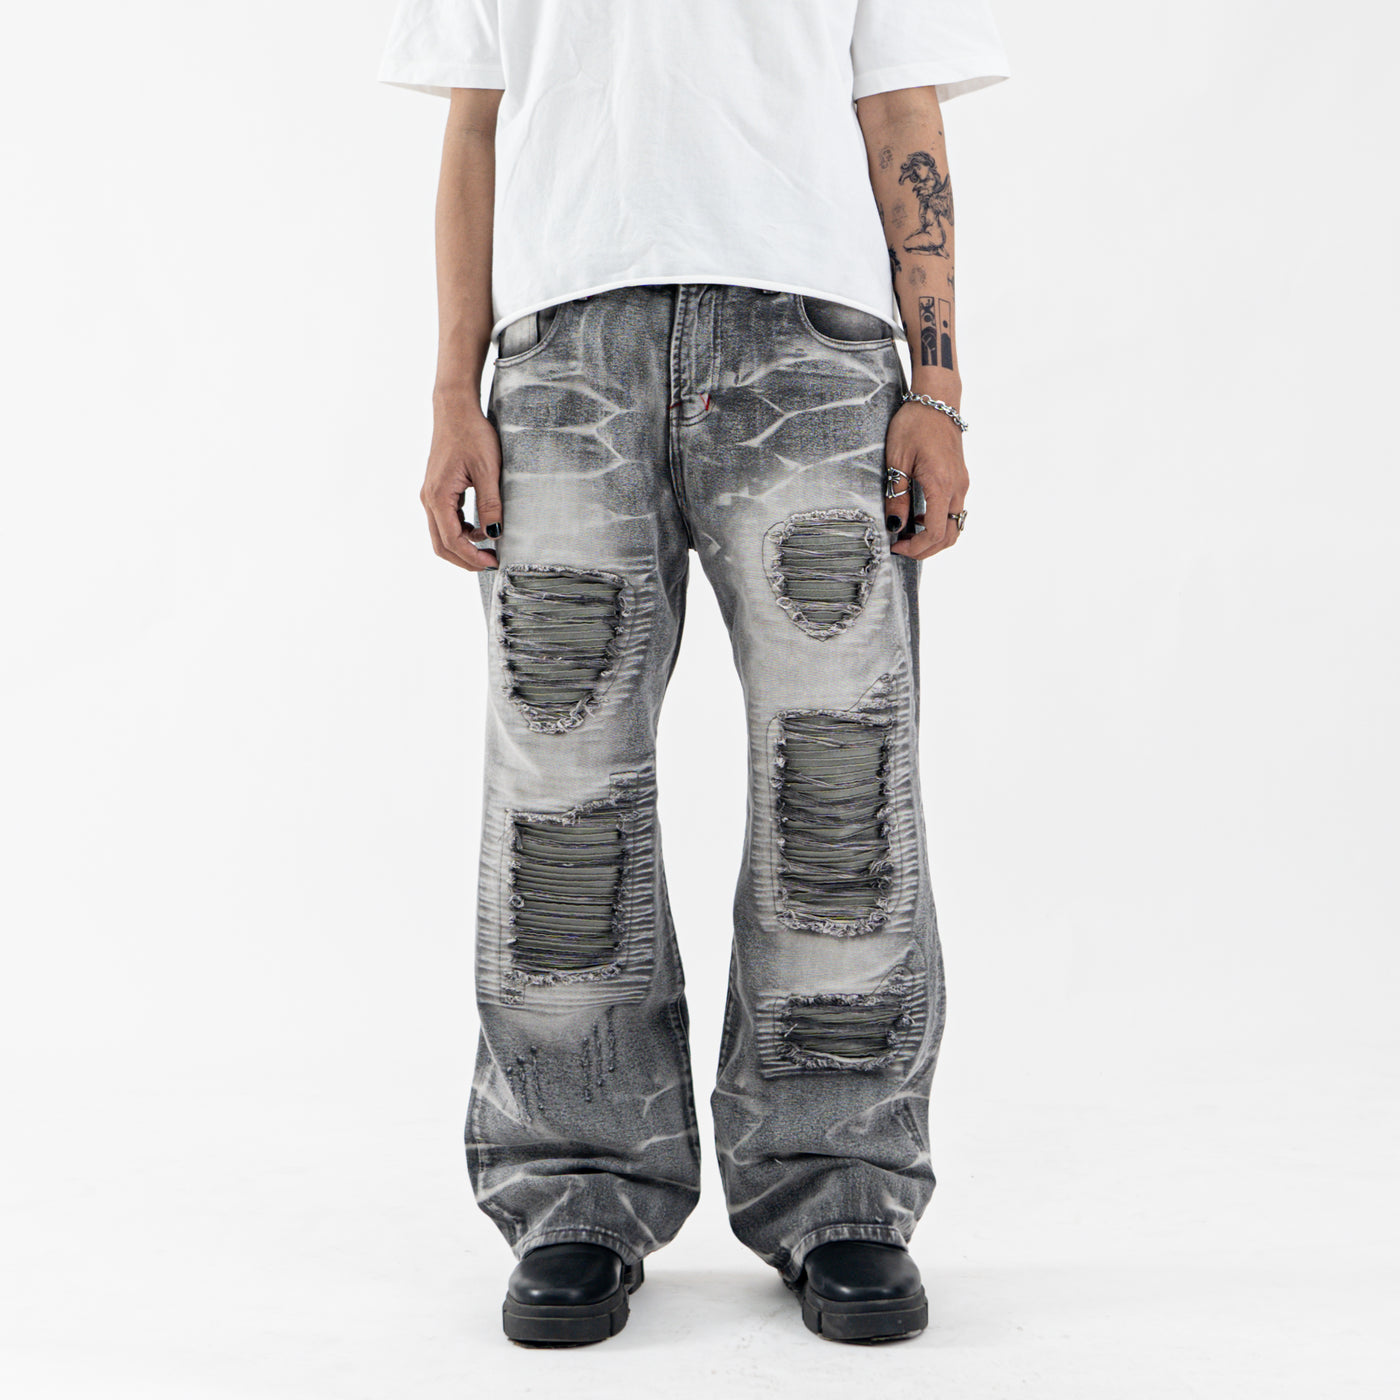 H1 baggy leather - Titanium grey - Celana Jeans